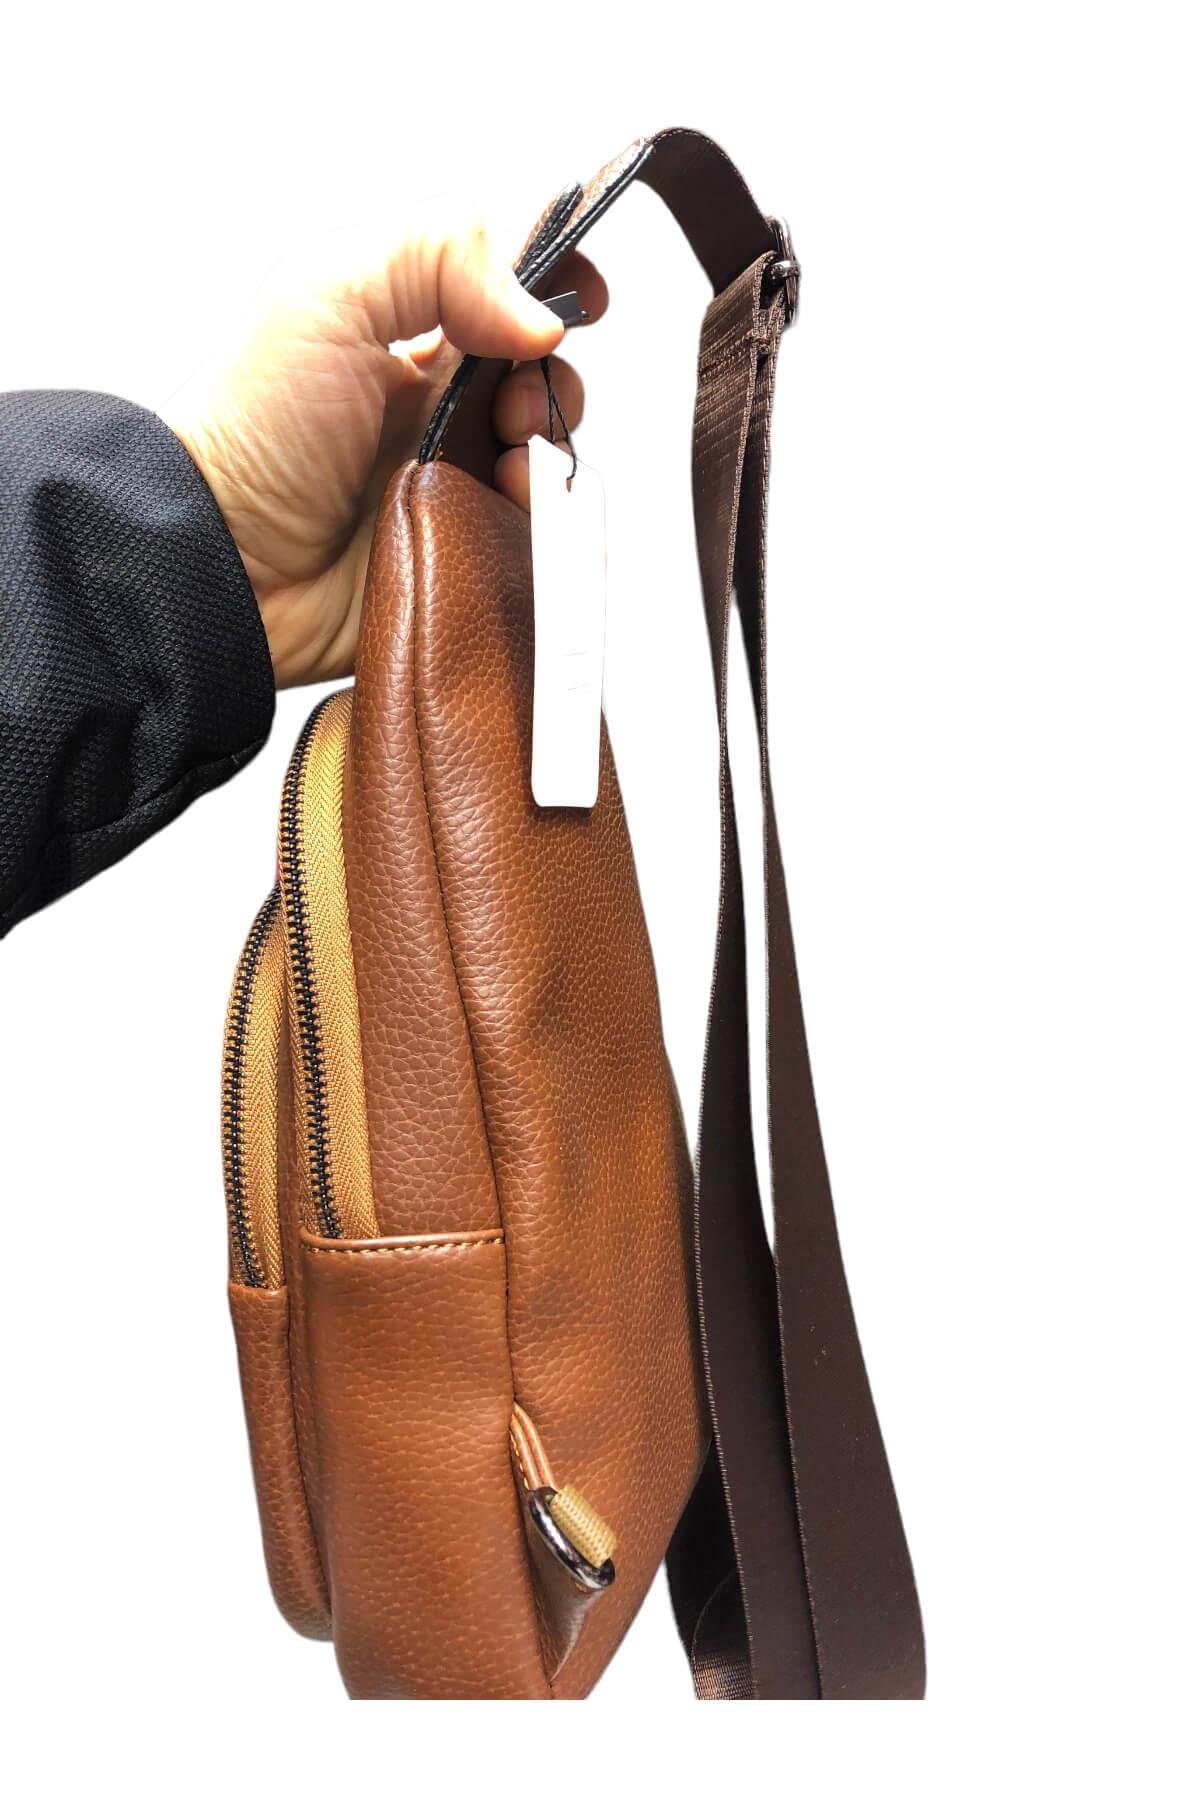 Erkek Bady bags çanta 28cm15 westpolo erkek çanta |elizabell.com.tr